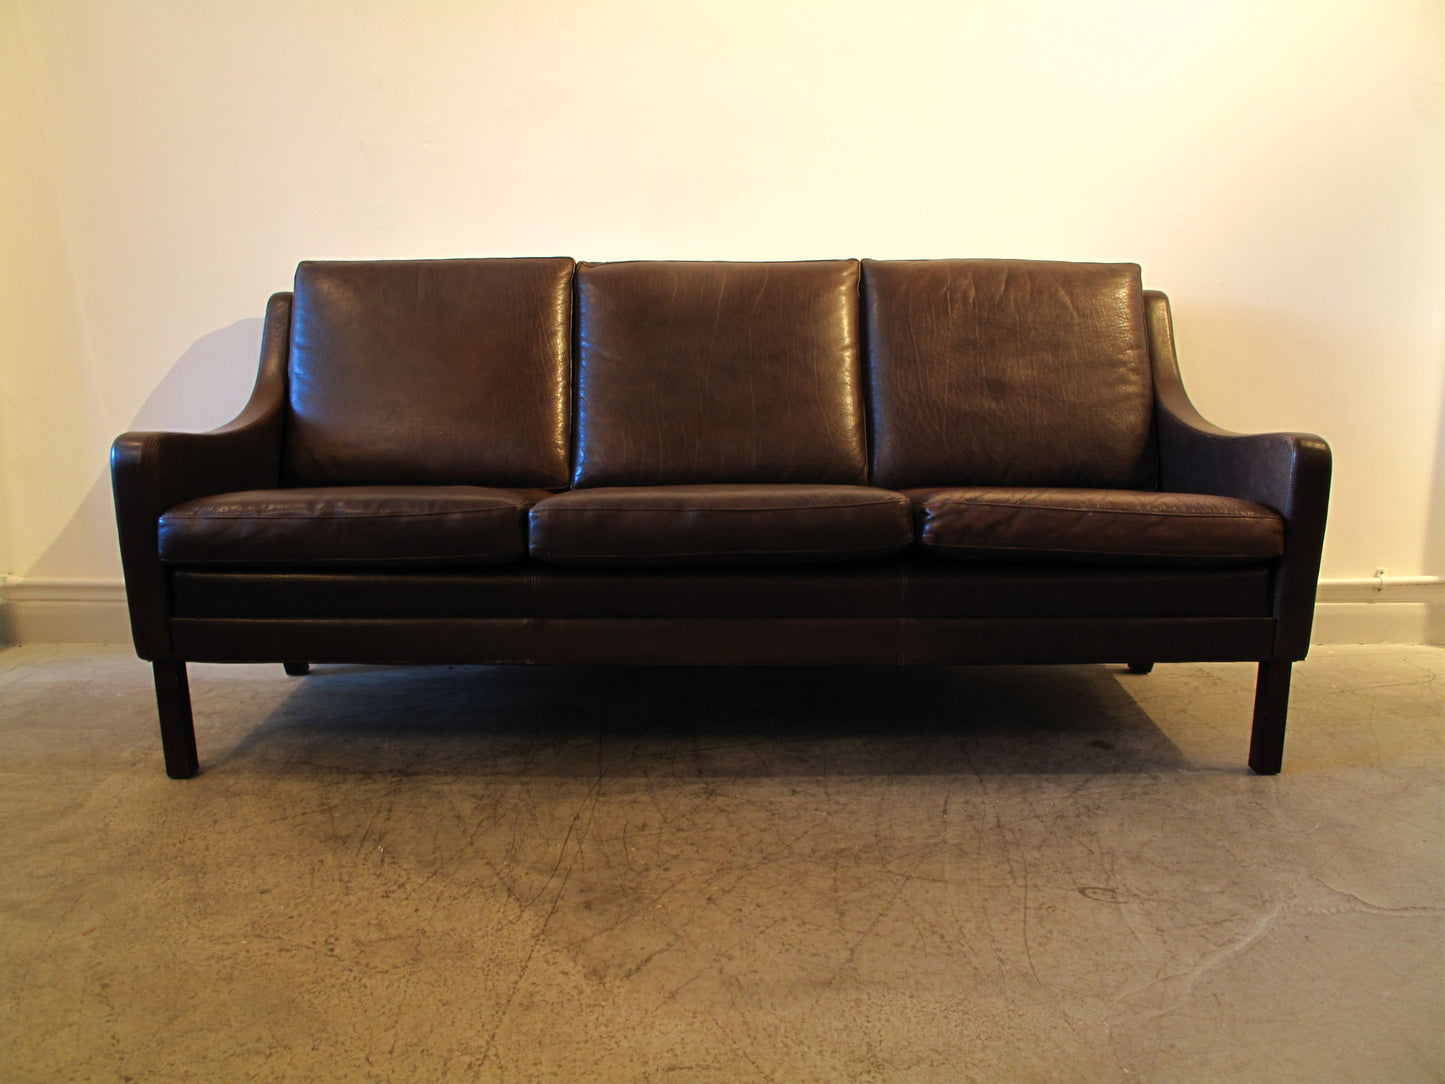 Three seat sofa in chocolate brown leather